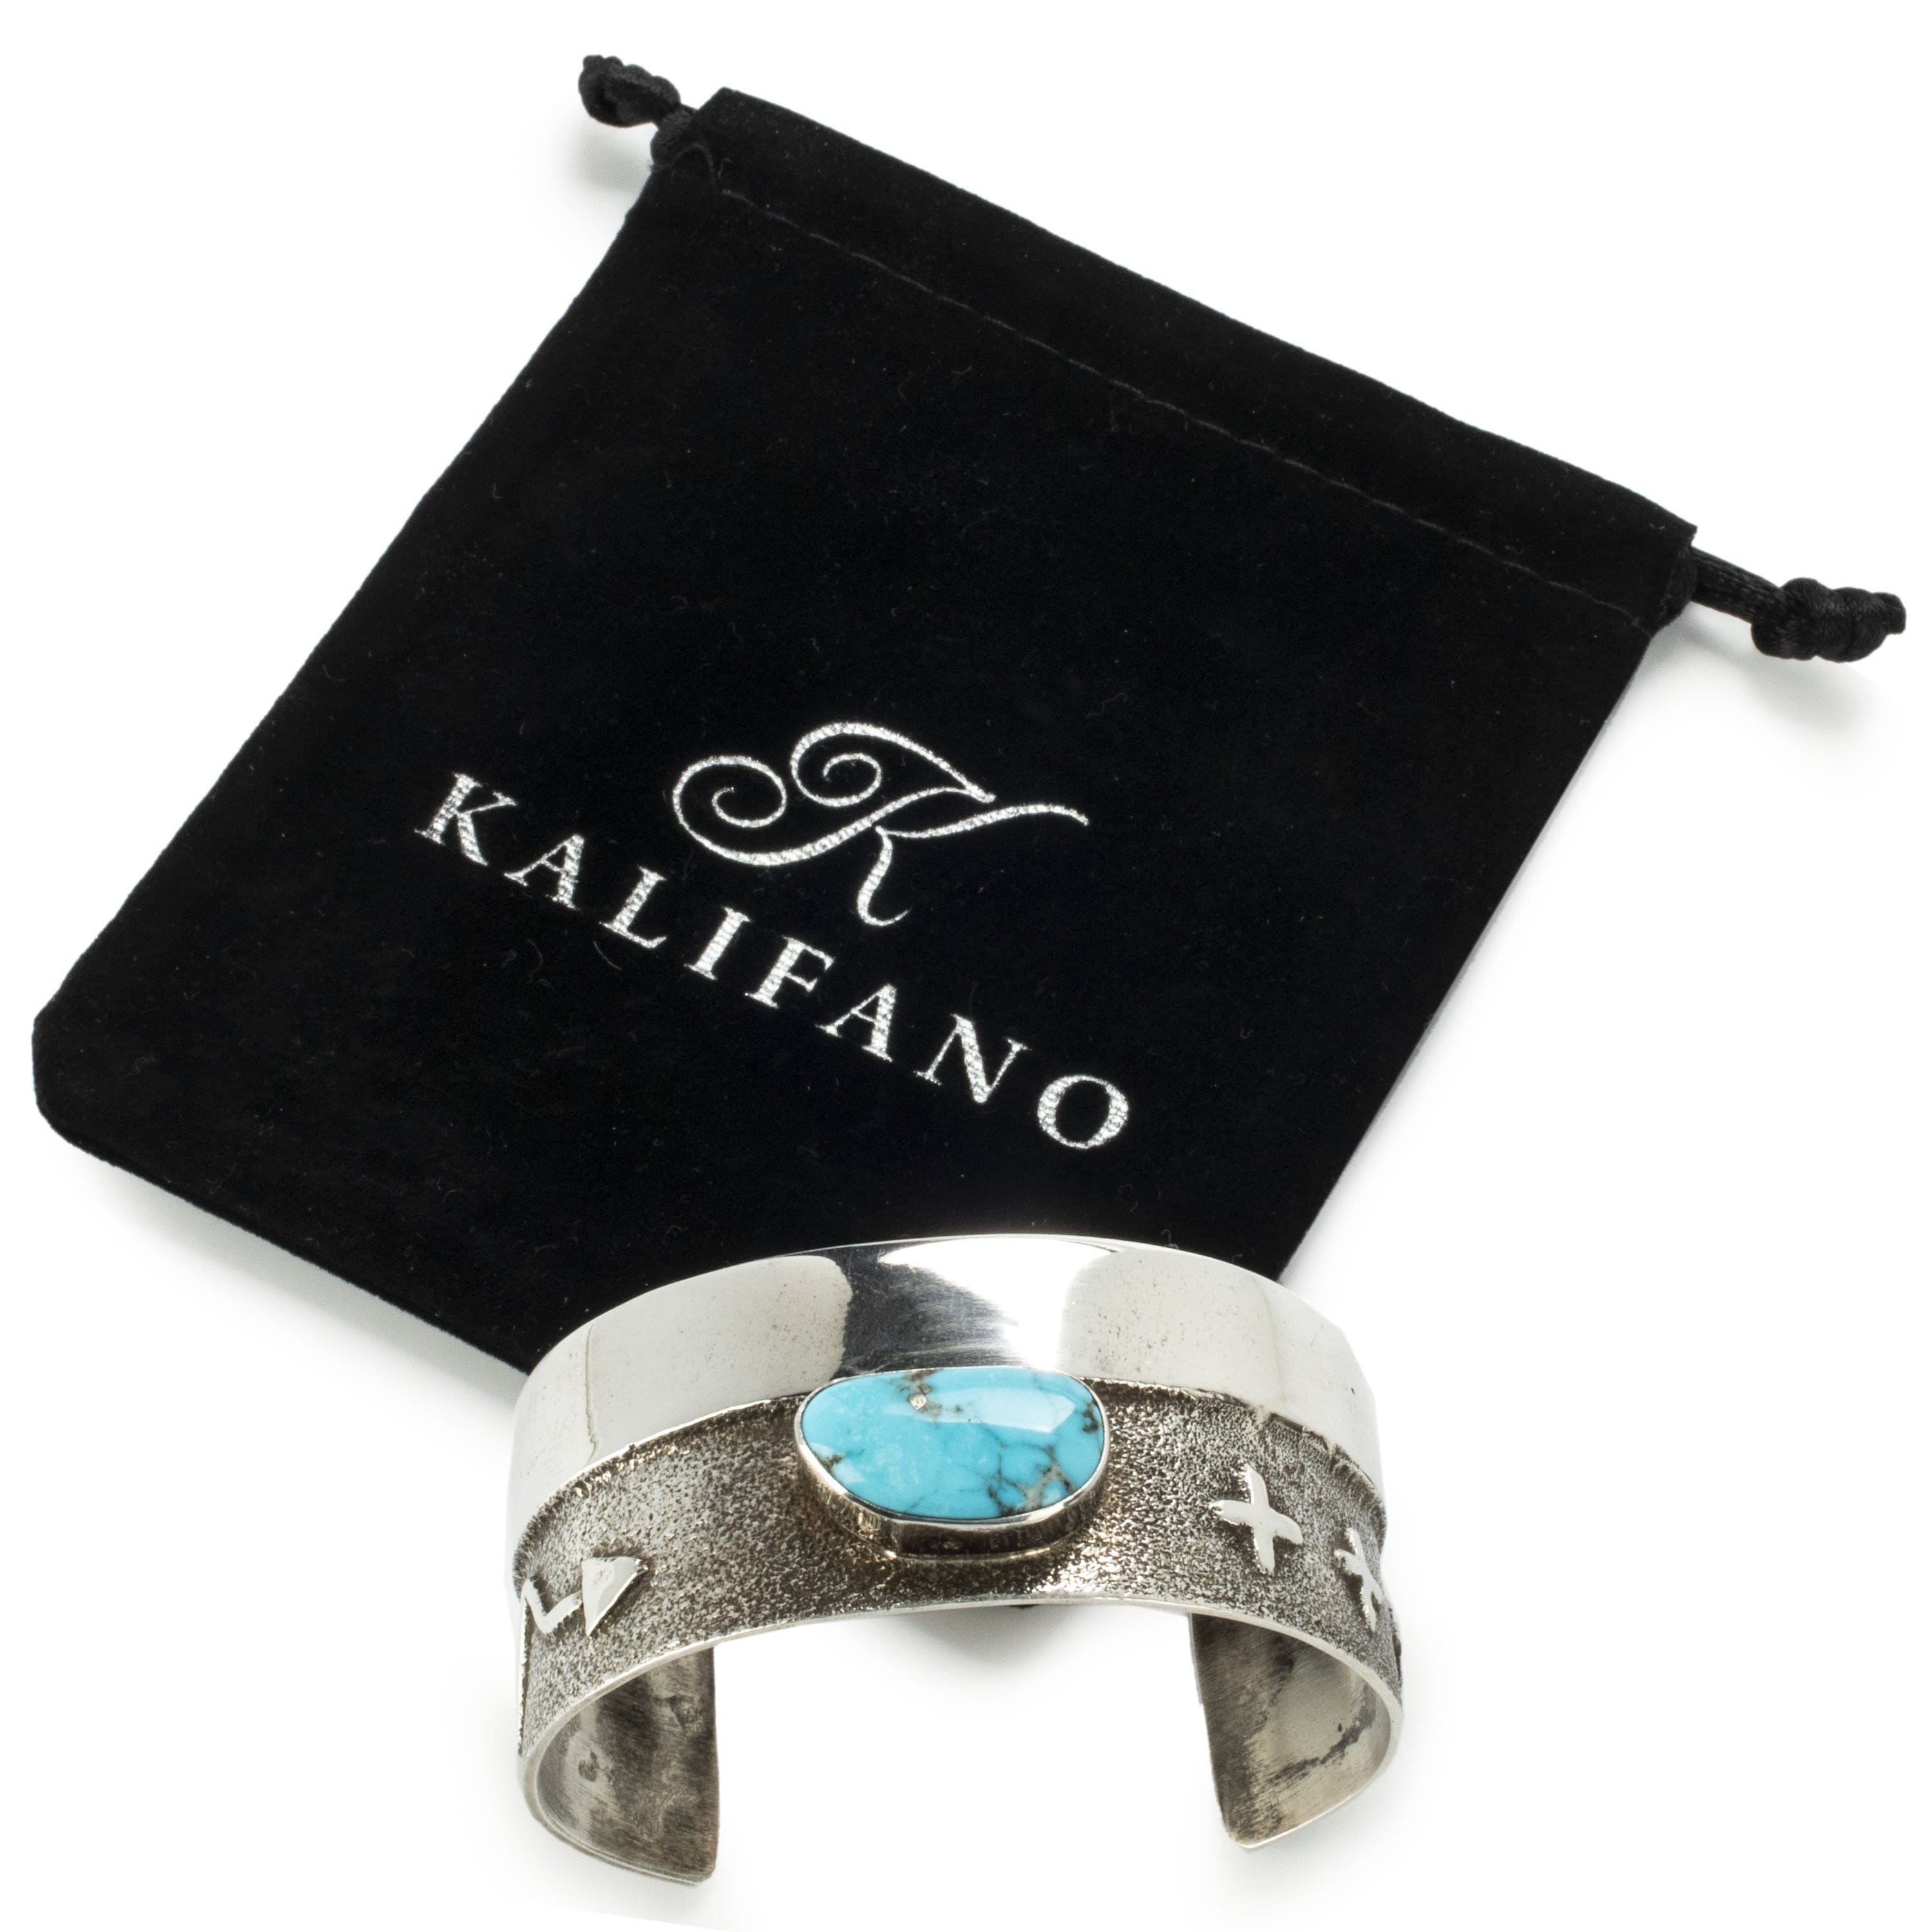 Kalifano Native American Jewelry Carico Lake Turquoise USA Native American Made 925 Sterling Silver Cuff NAB1300.004